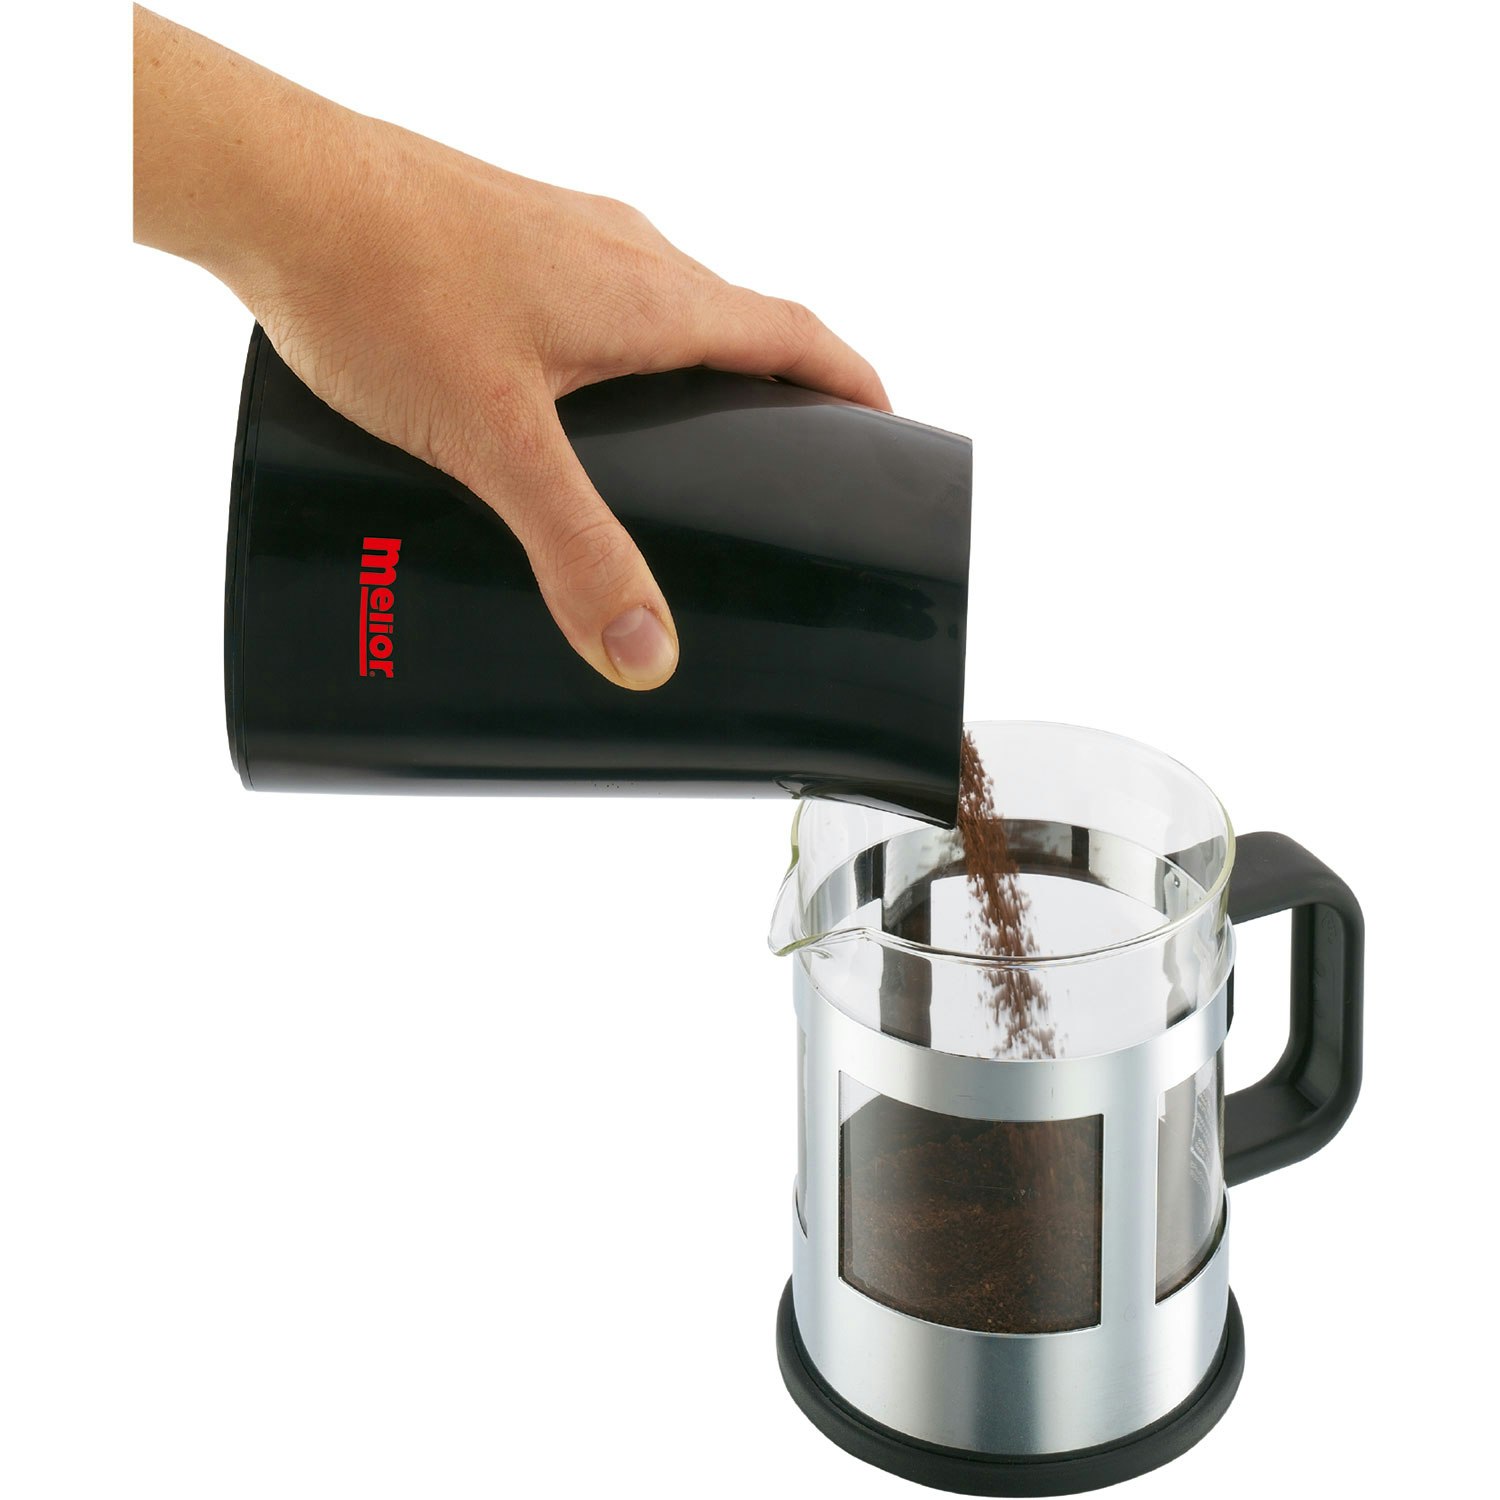 https://royaldesign.com/image/11/bodum-c-mill-electric-coffee-grinder-black-5